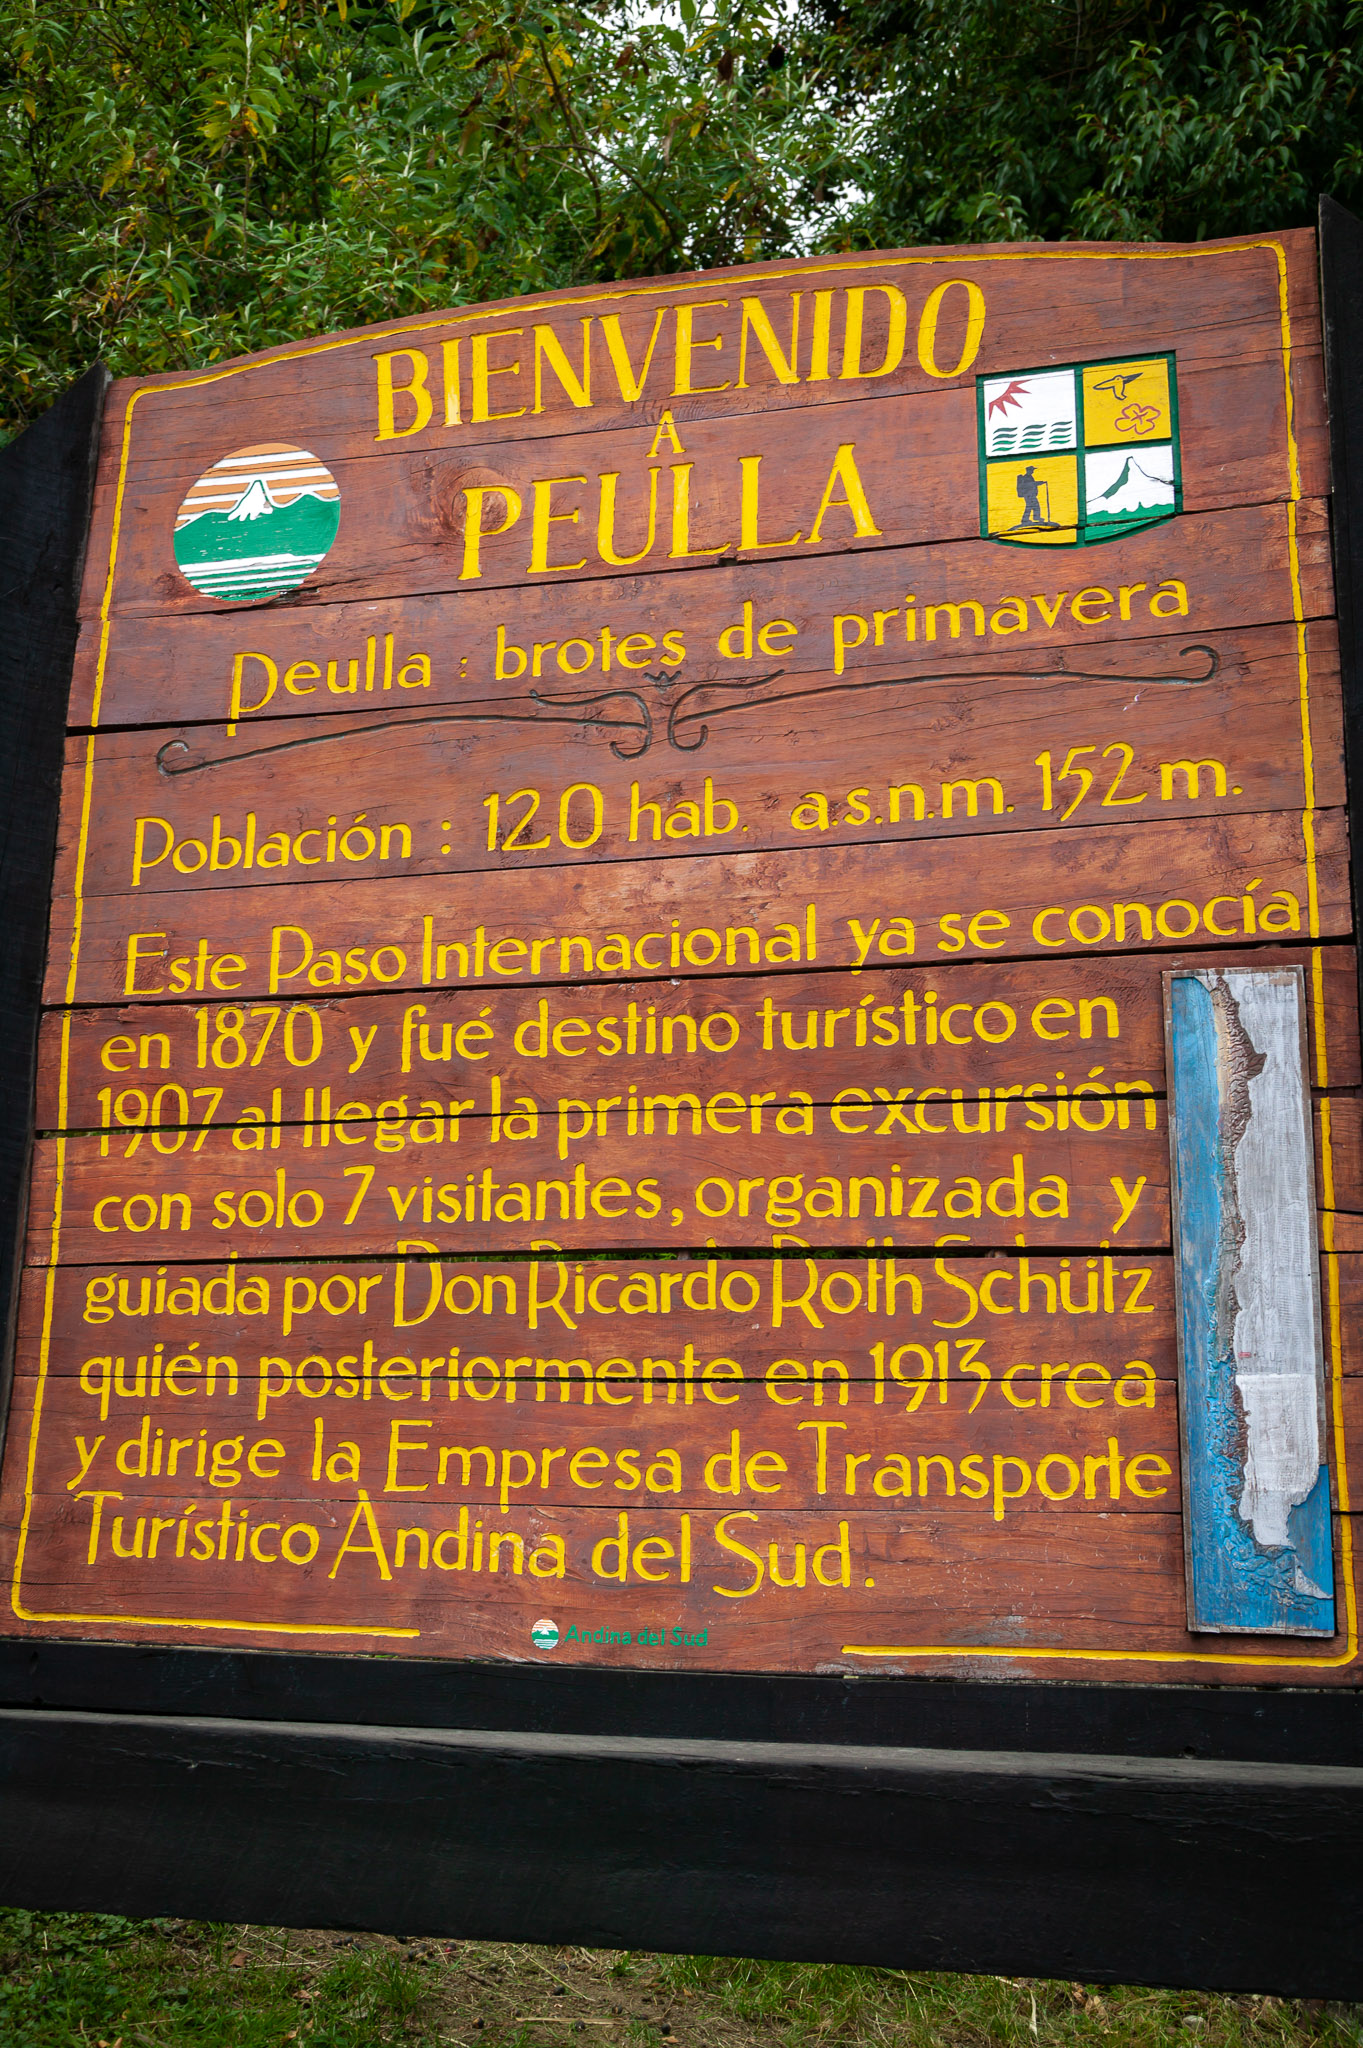 Peulla. near Argentinean border